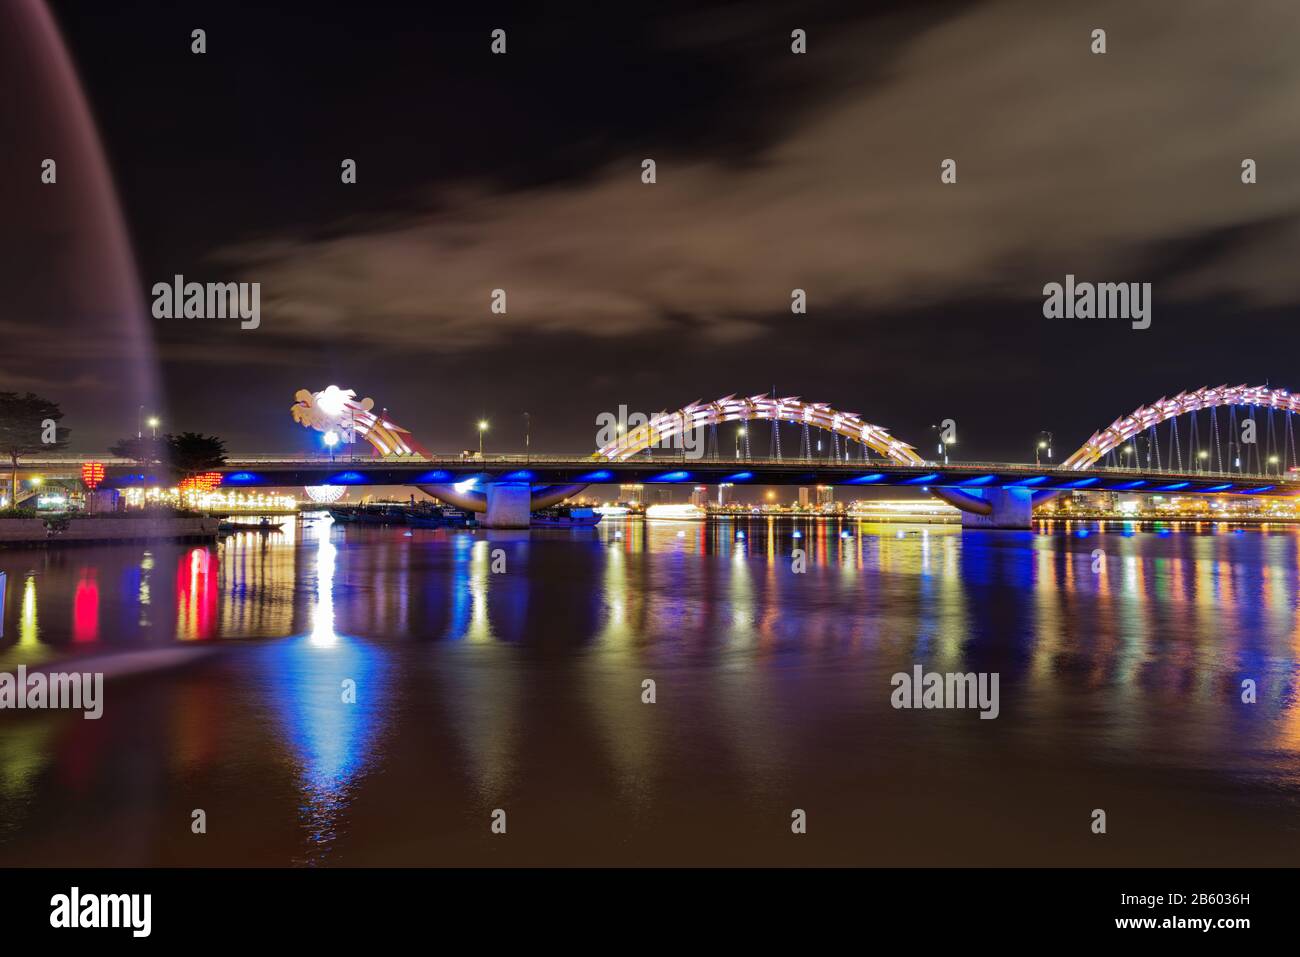 Panoramic view of illuminated Dragon bridge at night, all lit up. Da Nang, Vietnam Stock Photo